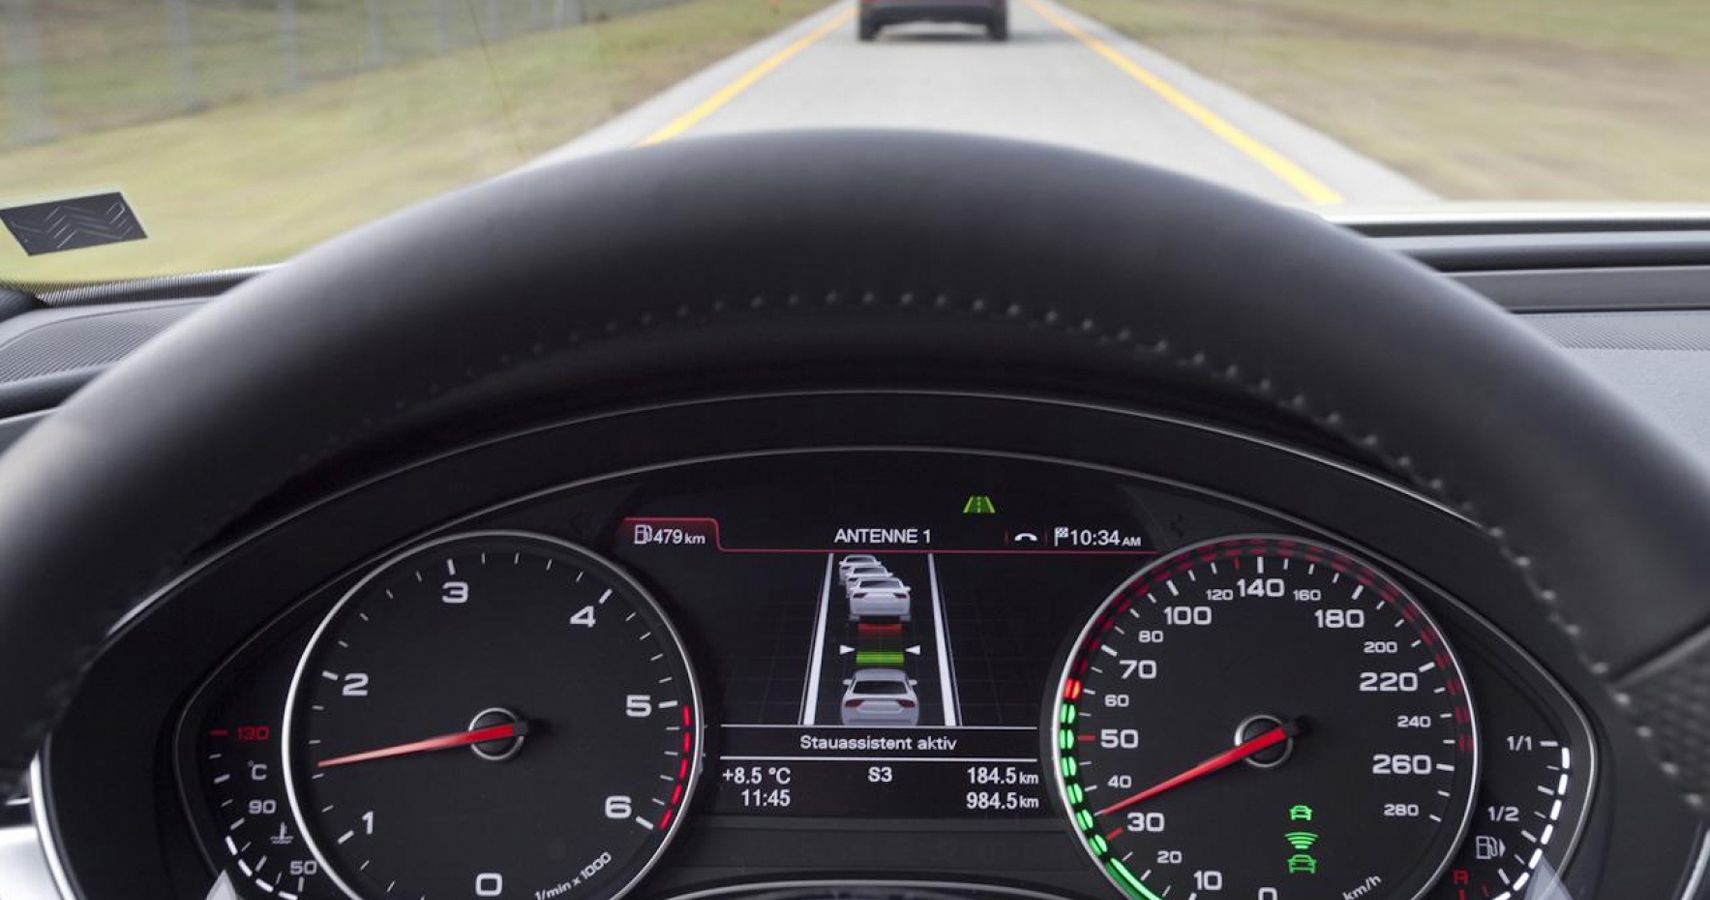 Audi's Adaptive Cruise Control